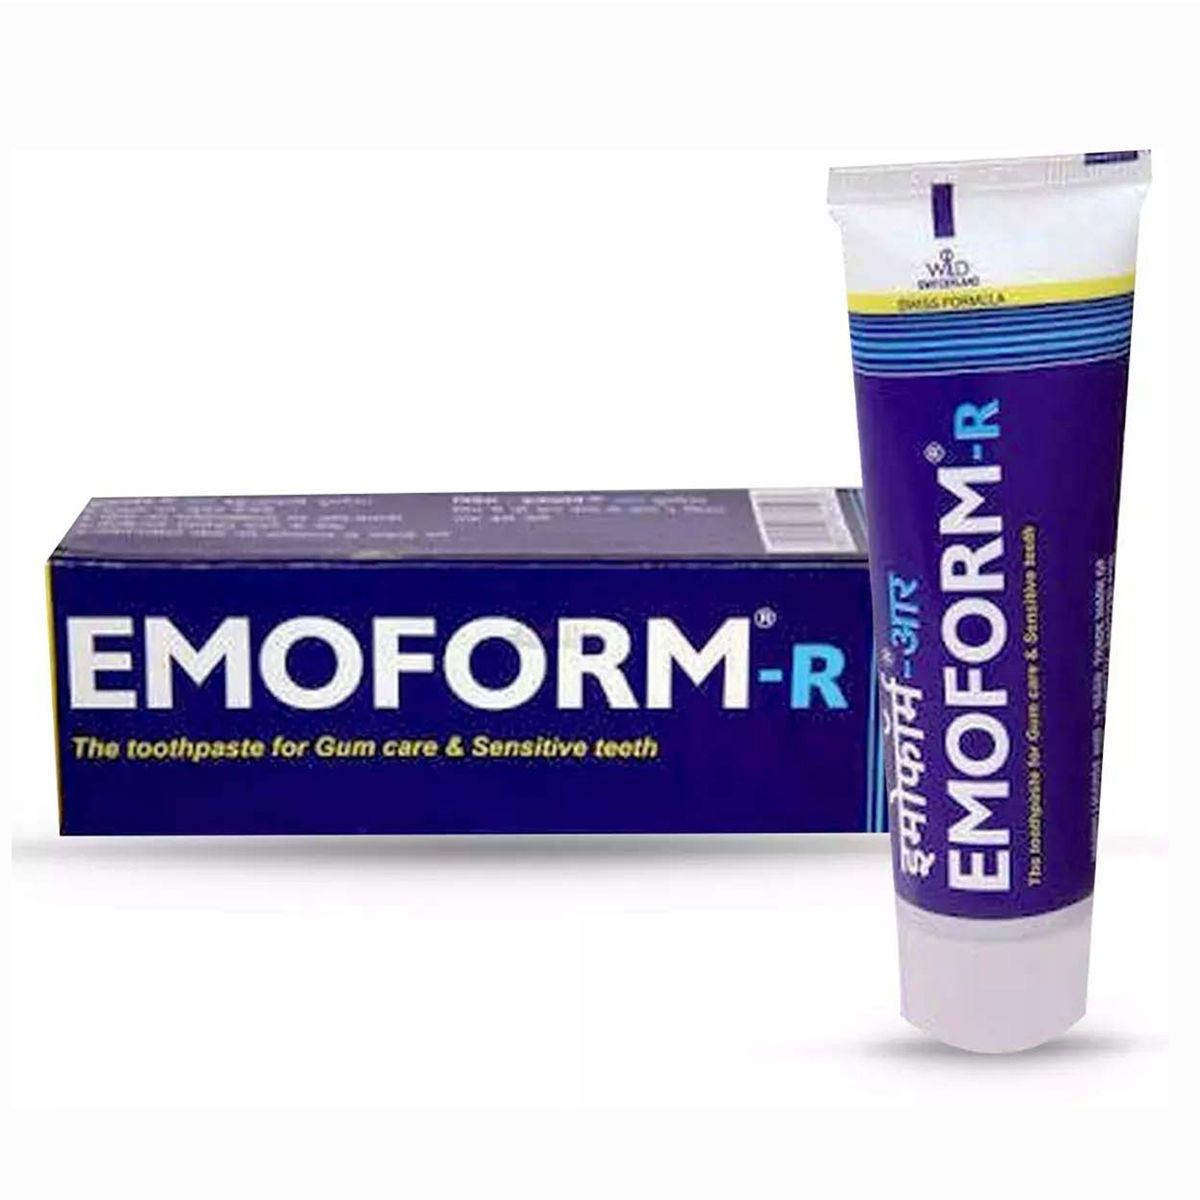 Buy Emoform-R Toothpaste, 50 gm Online